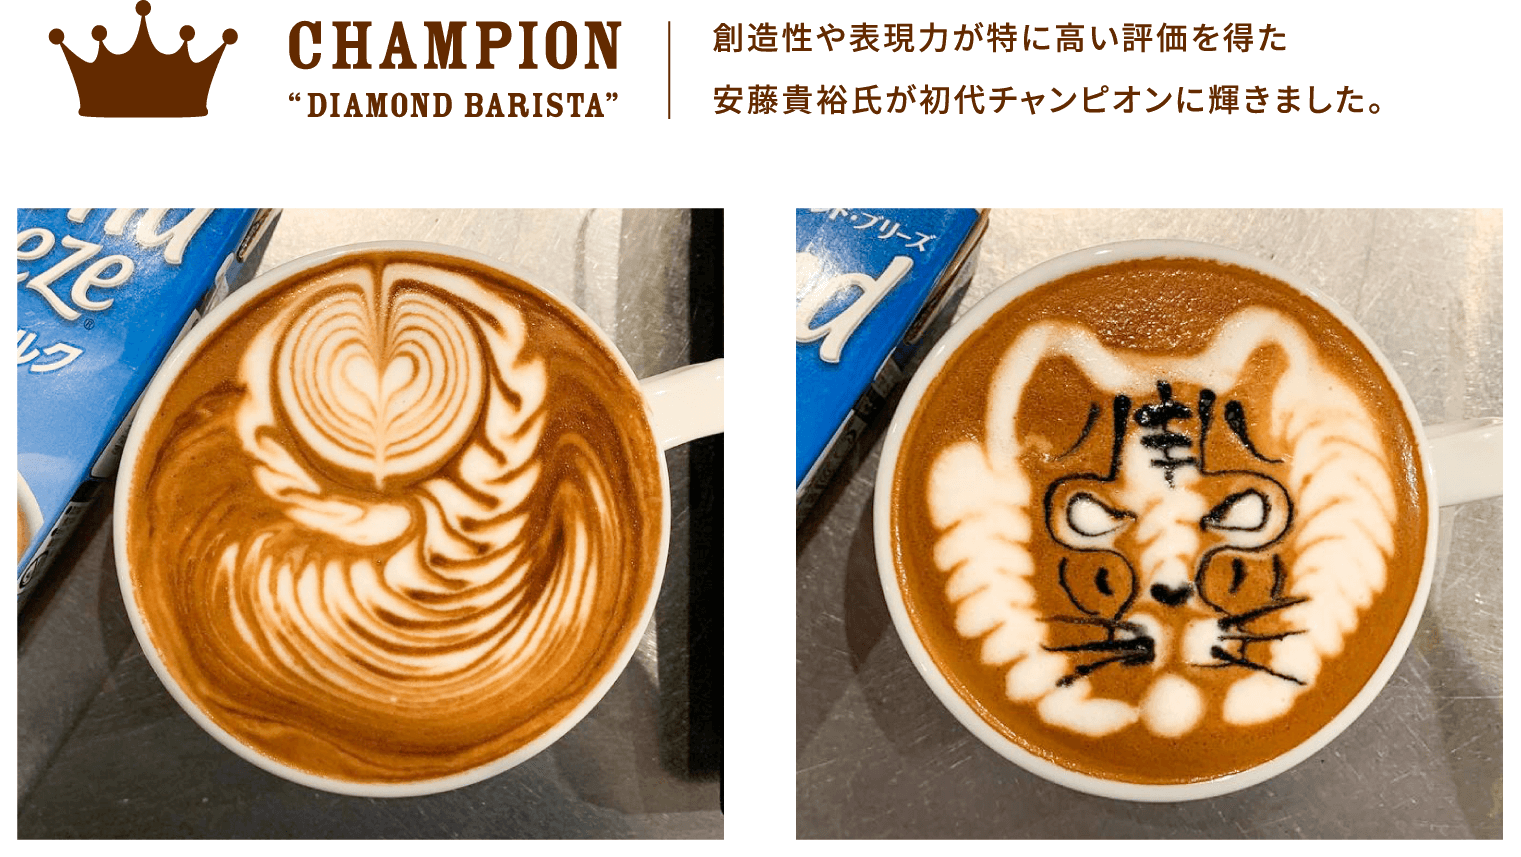 CHAMPION 独創性や表現力が特に高い評価を得た安藤貴裕氏が初代チャンピオンに輝きました。